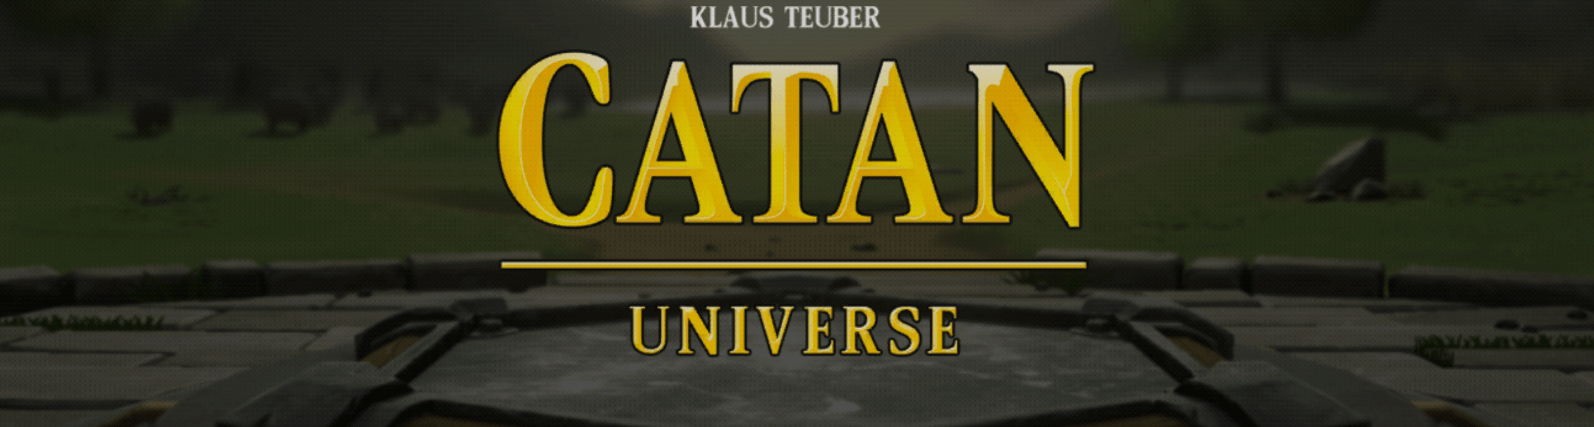 Catan Logo - Catan Universe App Review